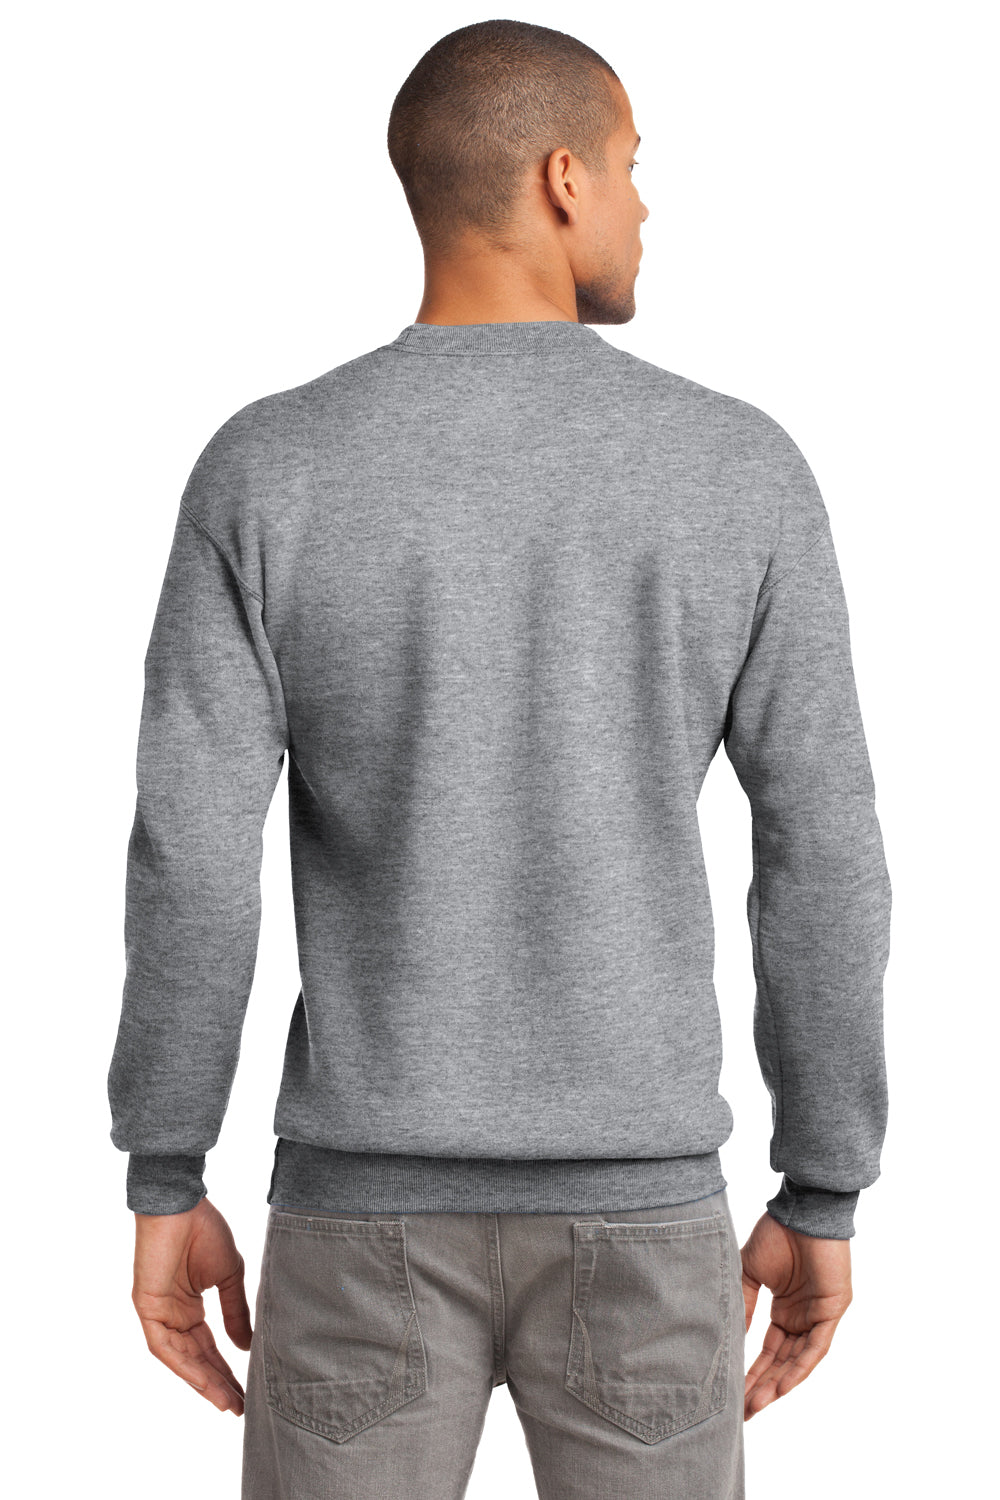 Port & Company PC90 Mens Essential Fleece Crewneck Sweatshirt Heather Grey Back